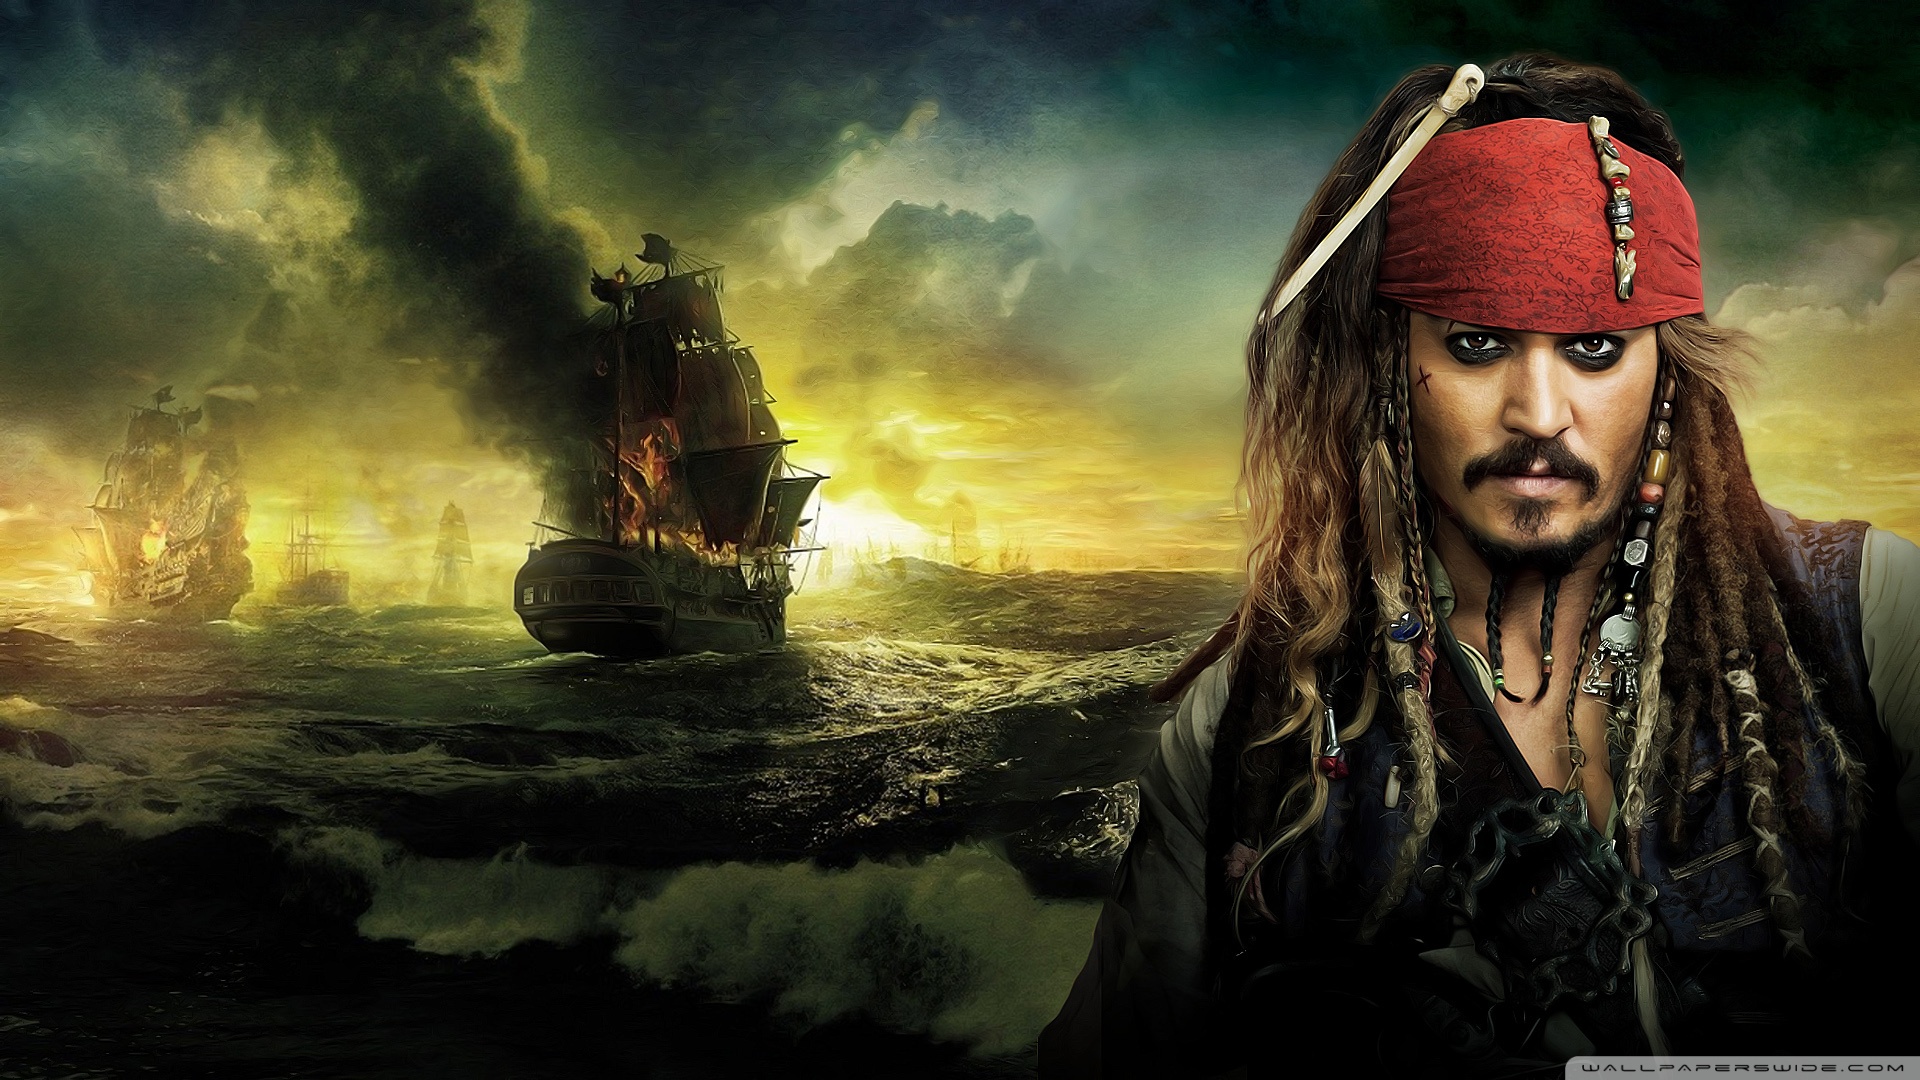  Tides Johnny Deep As Capitain Jack Sparrow 2011 1920x1080 HD Wallpaper